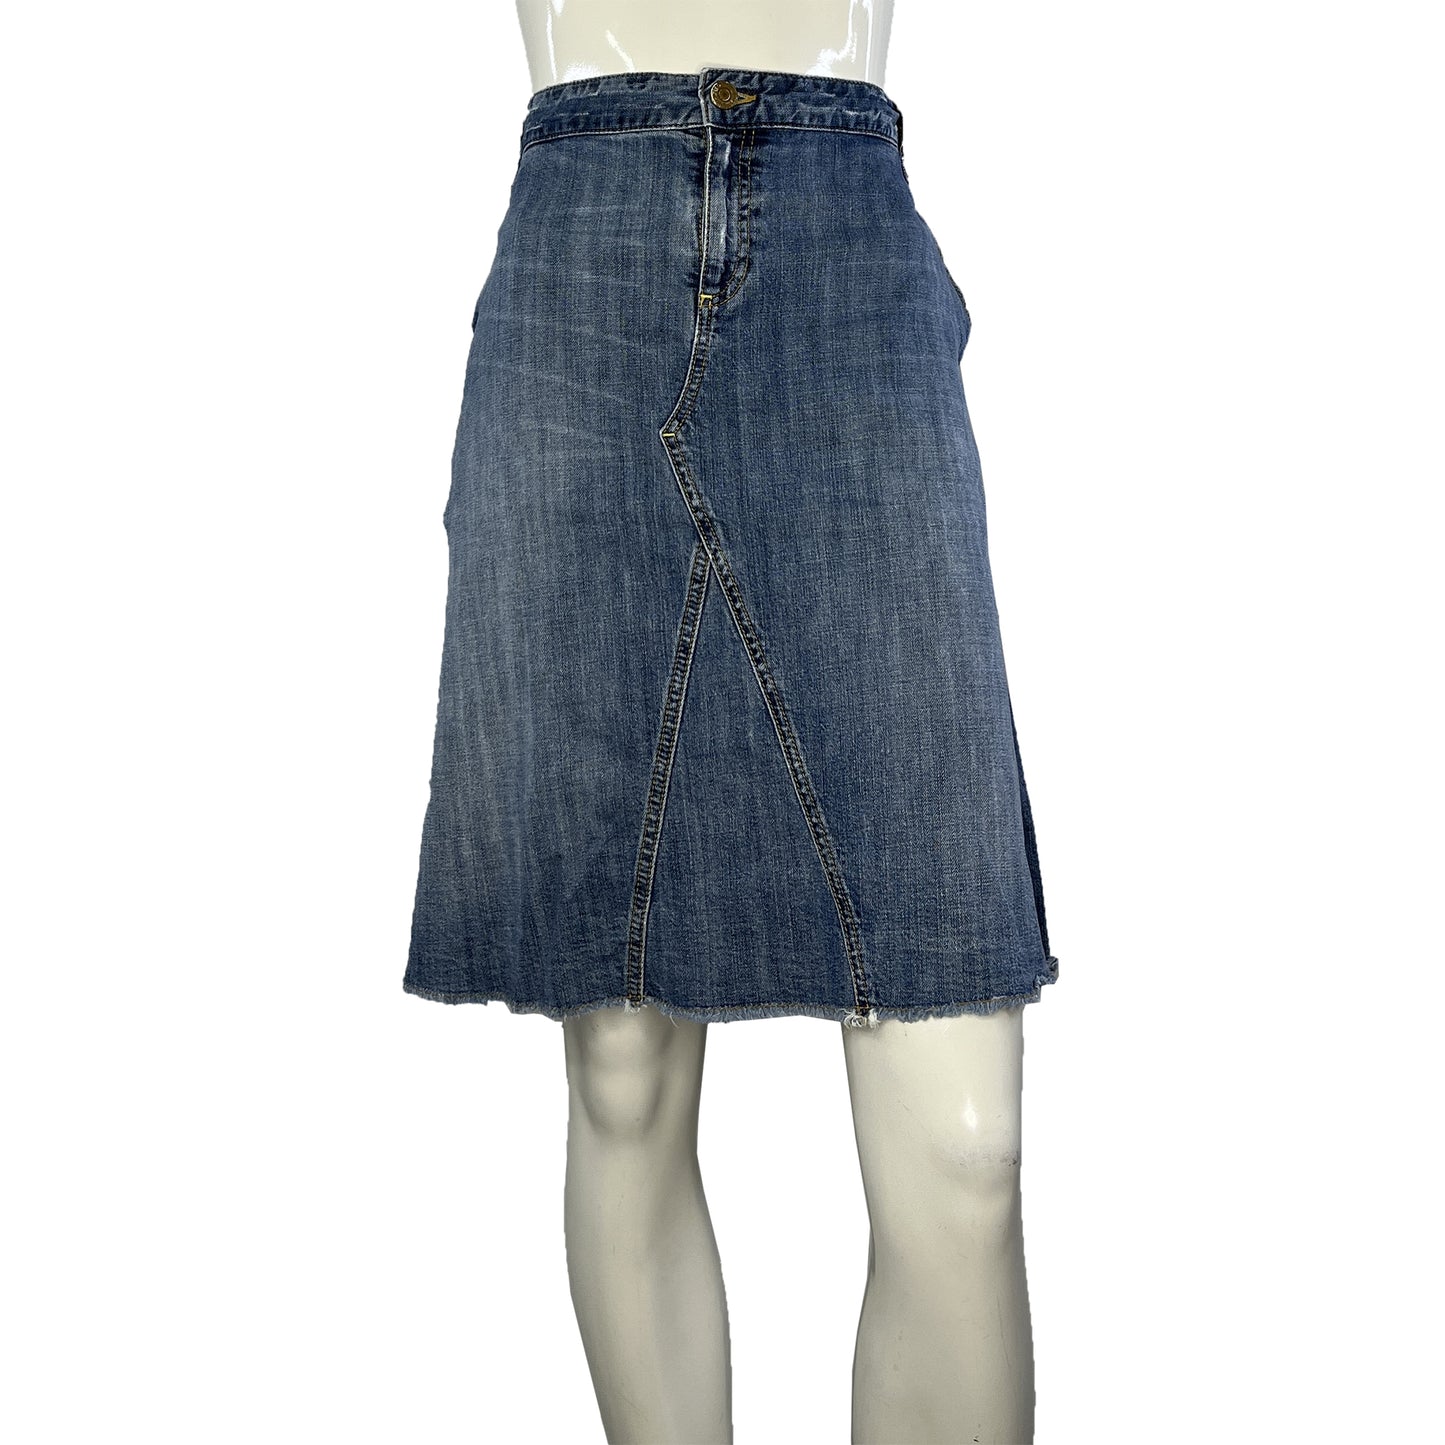 Banana Republic Denim Skirt Blue Size 14 SKU 000424-7